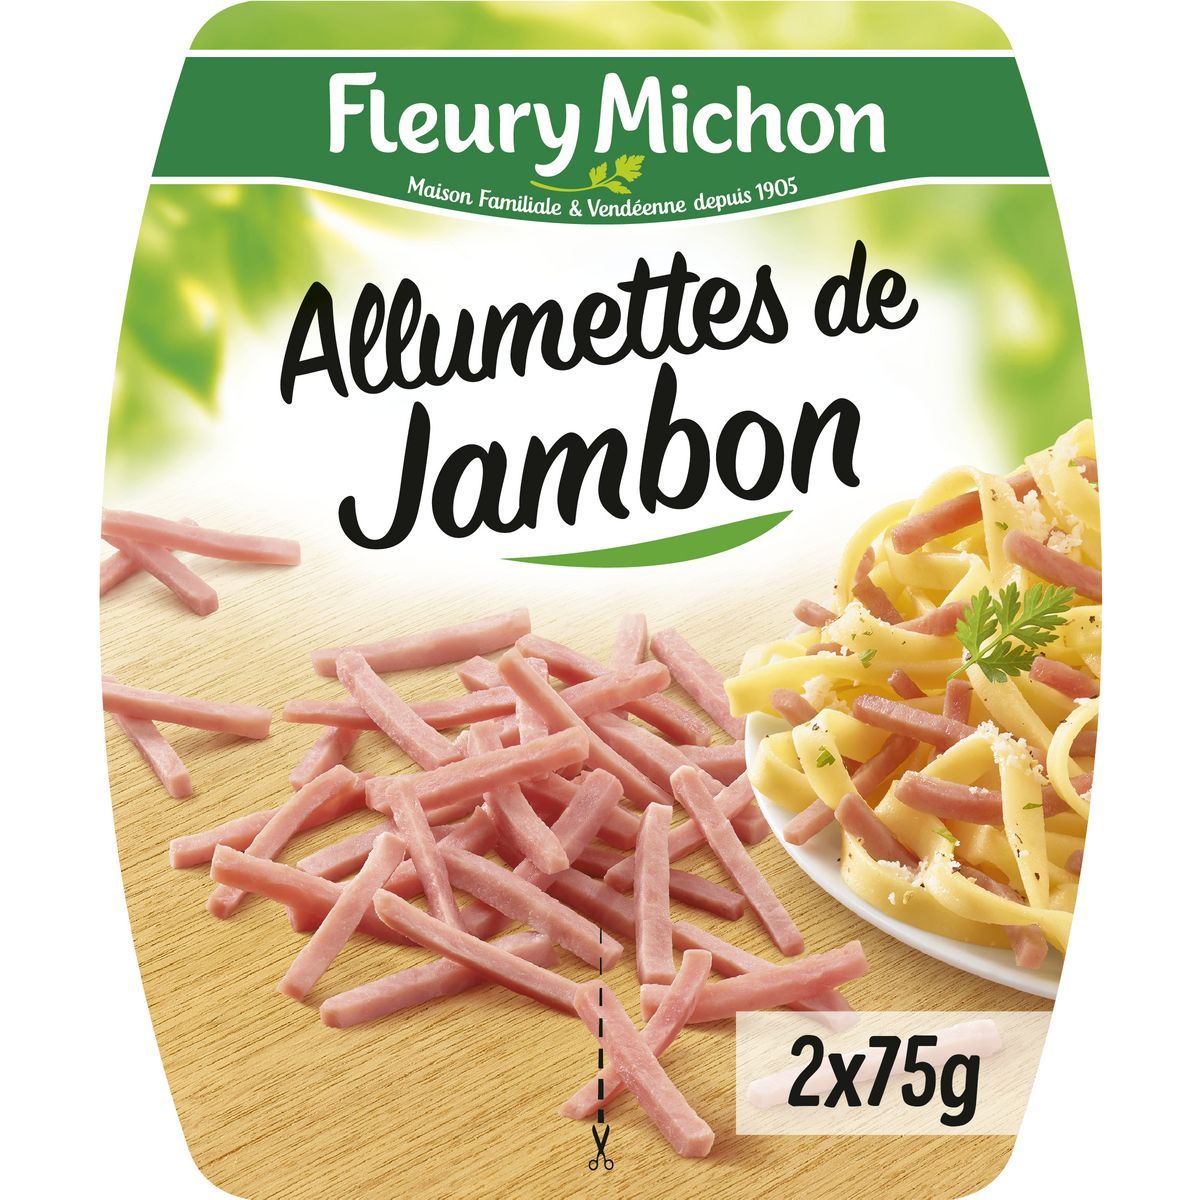 ALLUMETTES DE JAMBON  FLEURY MICHON